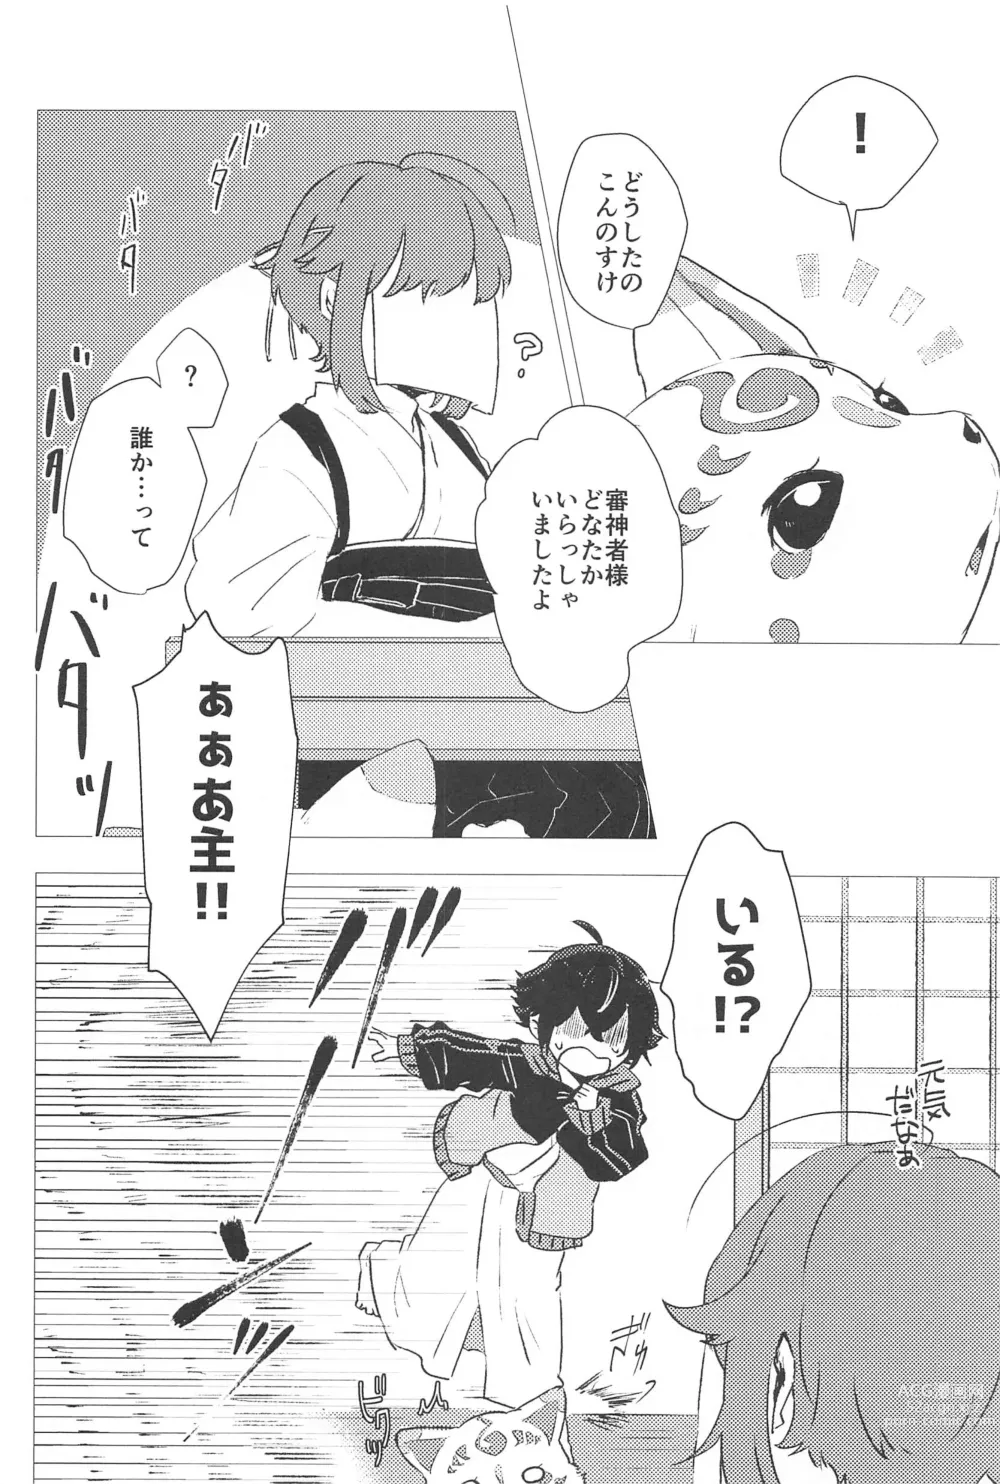 Page 5 of doujinshi Konnanotte Nai!